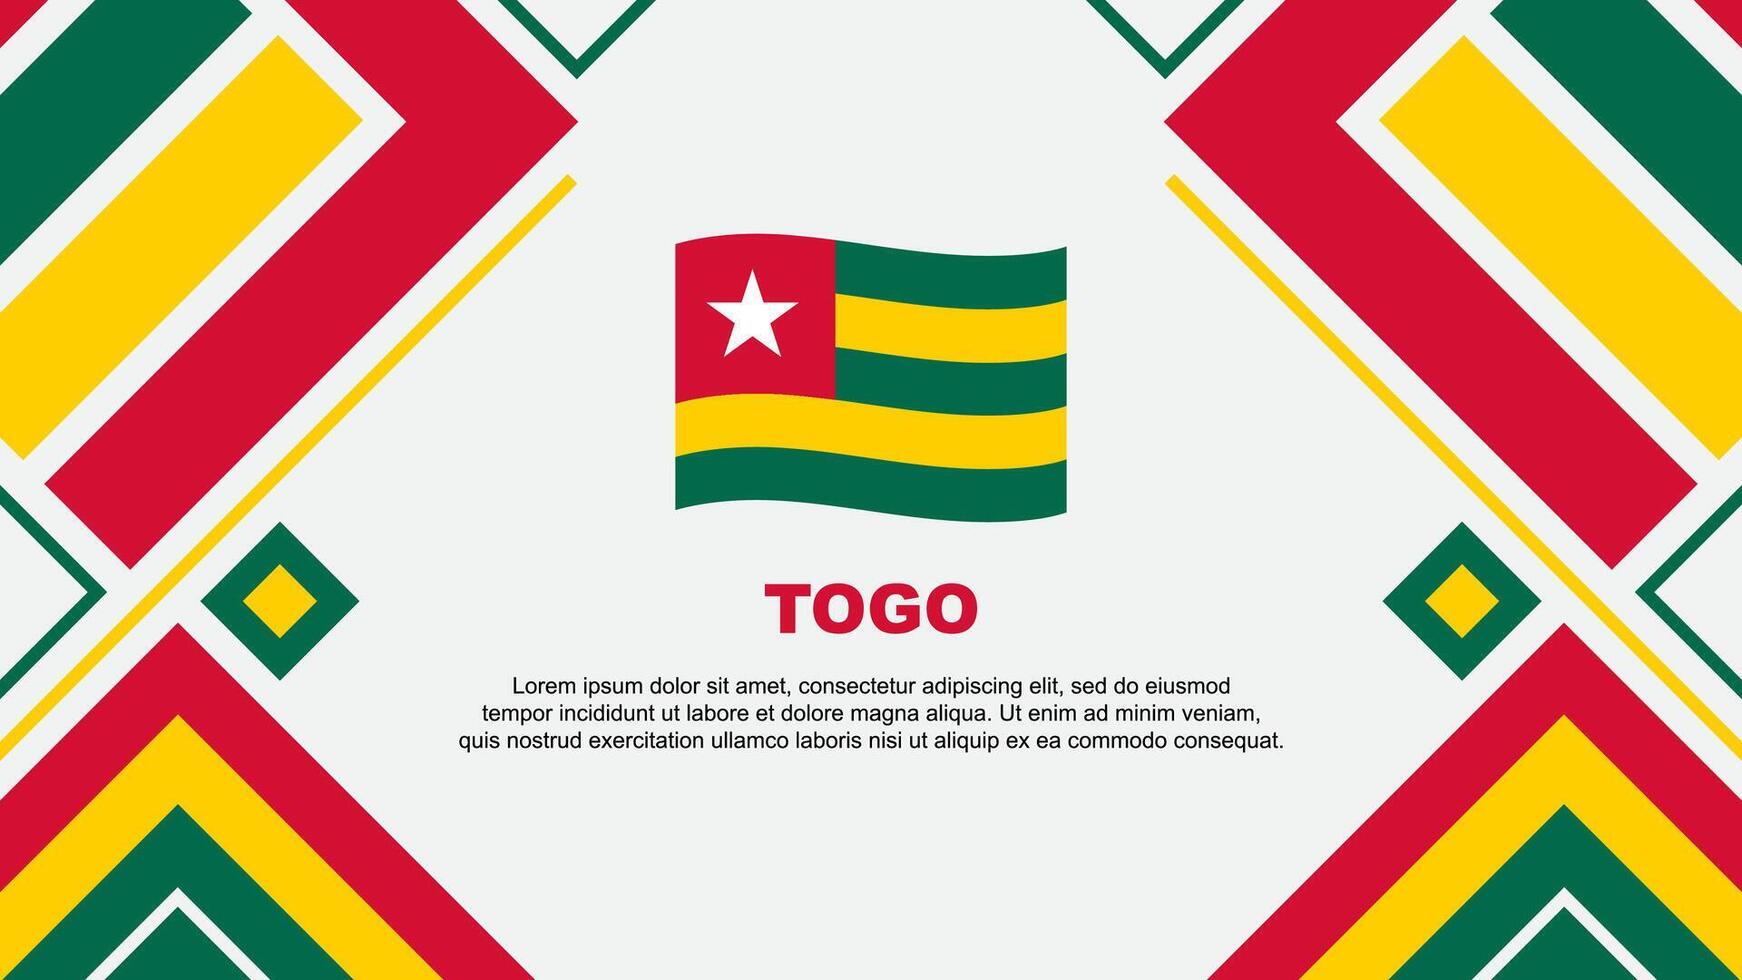 Togo Flag Abstract Background Design Template. Togo Independence Day Banner Wallpaper Vector Illustration. Togo Flag